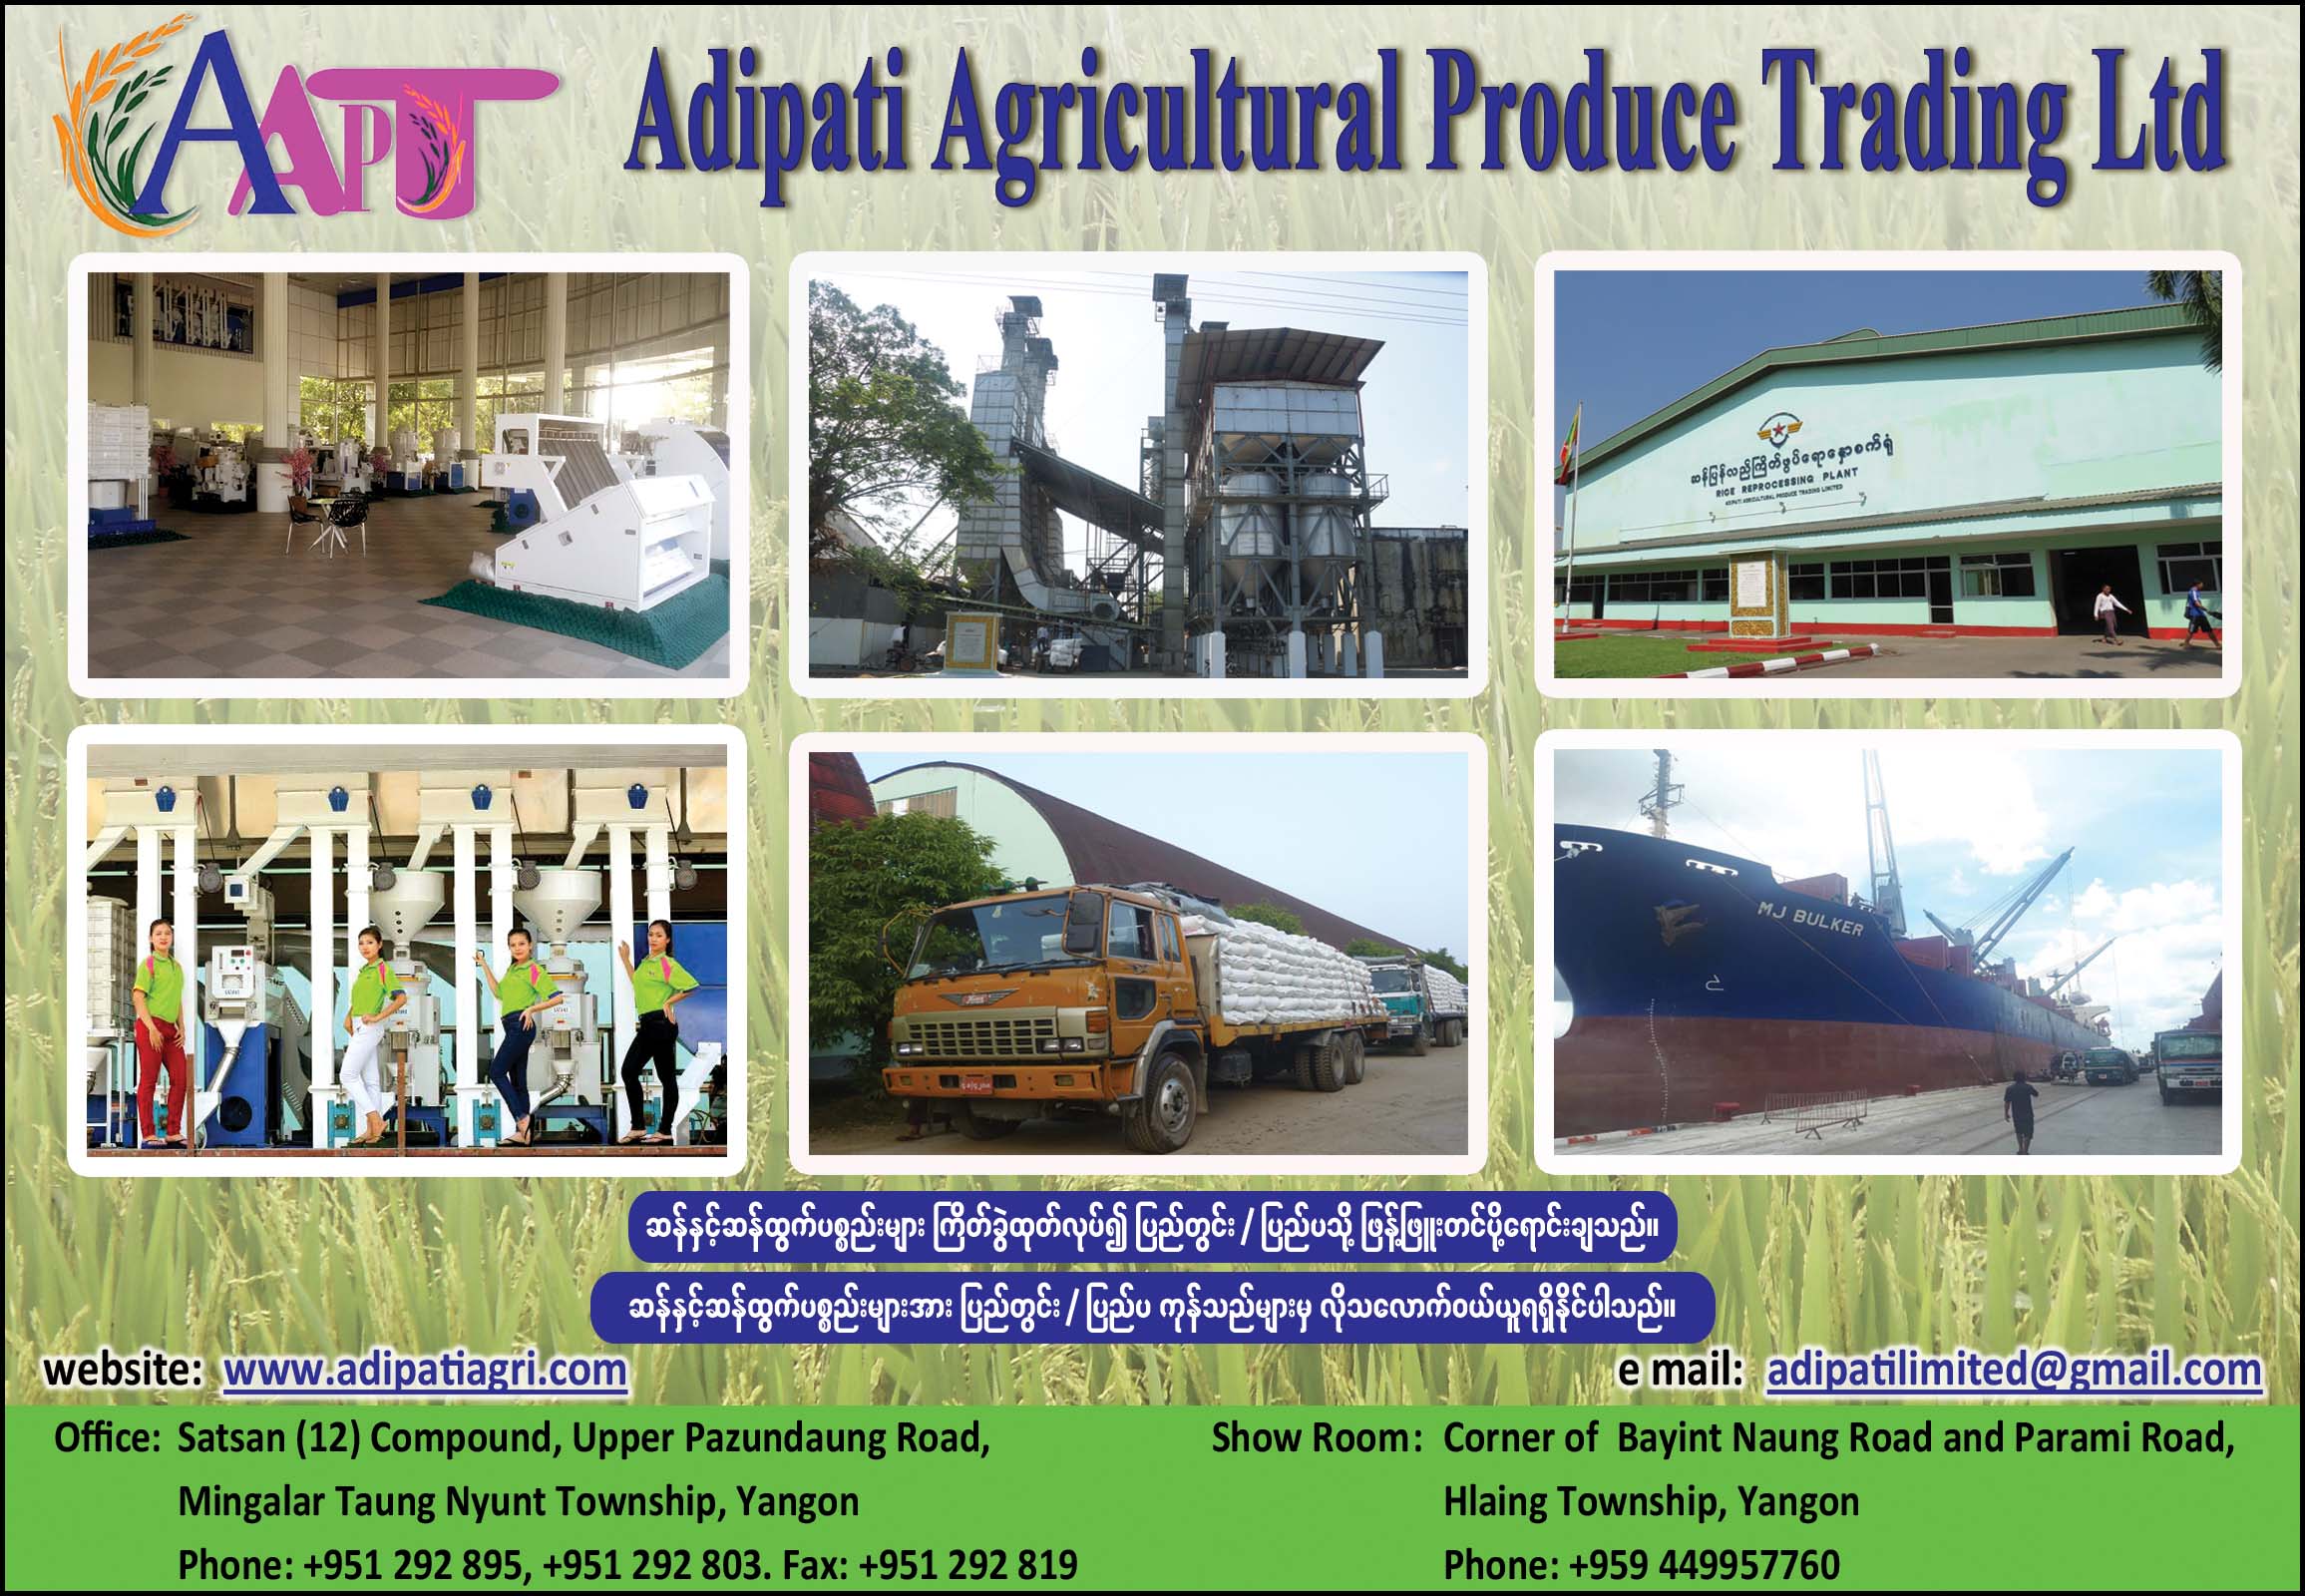 Adipati Agricultural Produce Trading Ltd.